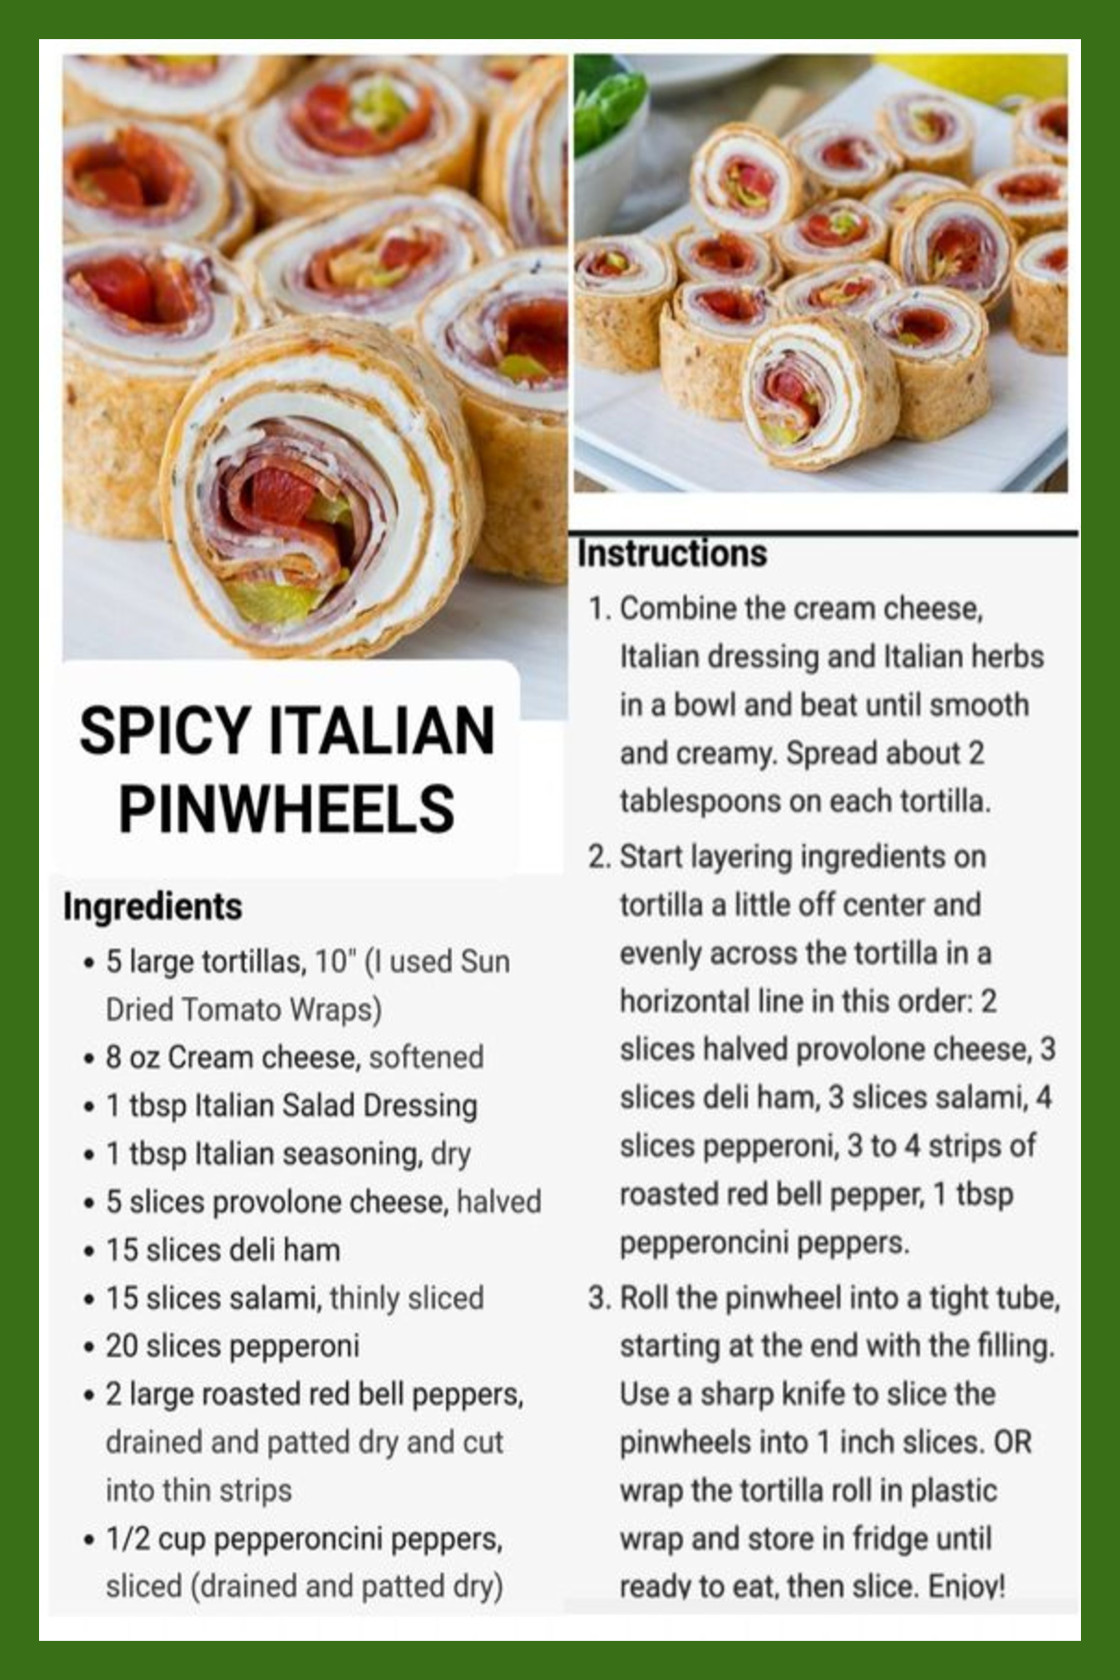 Spicy Italian Pinwheel RollUps